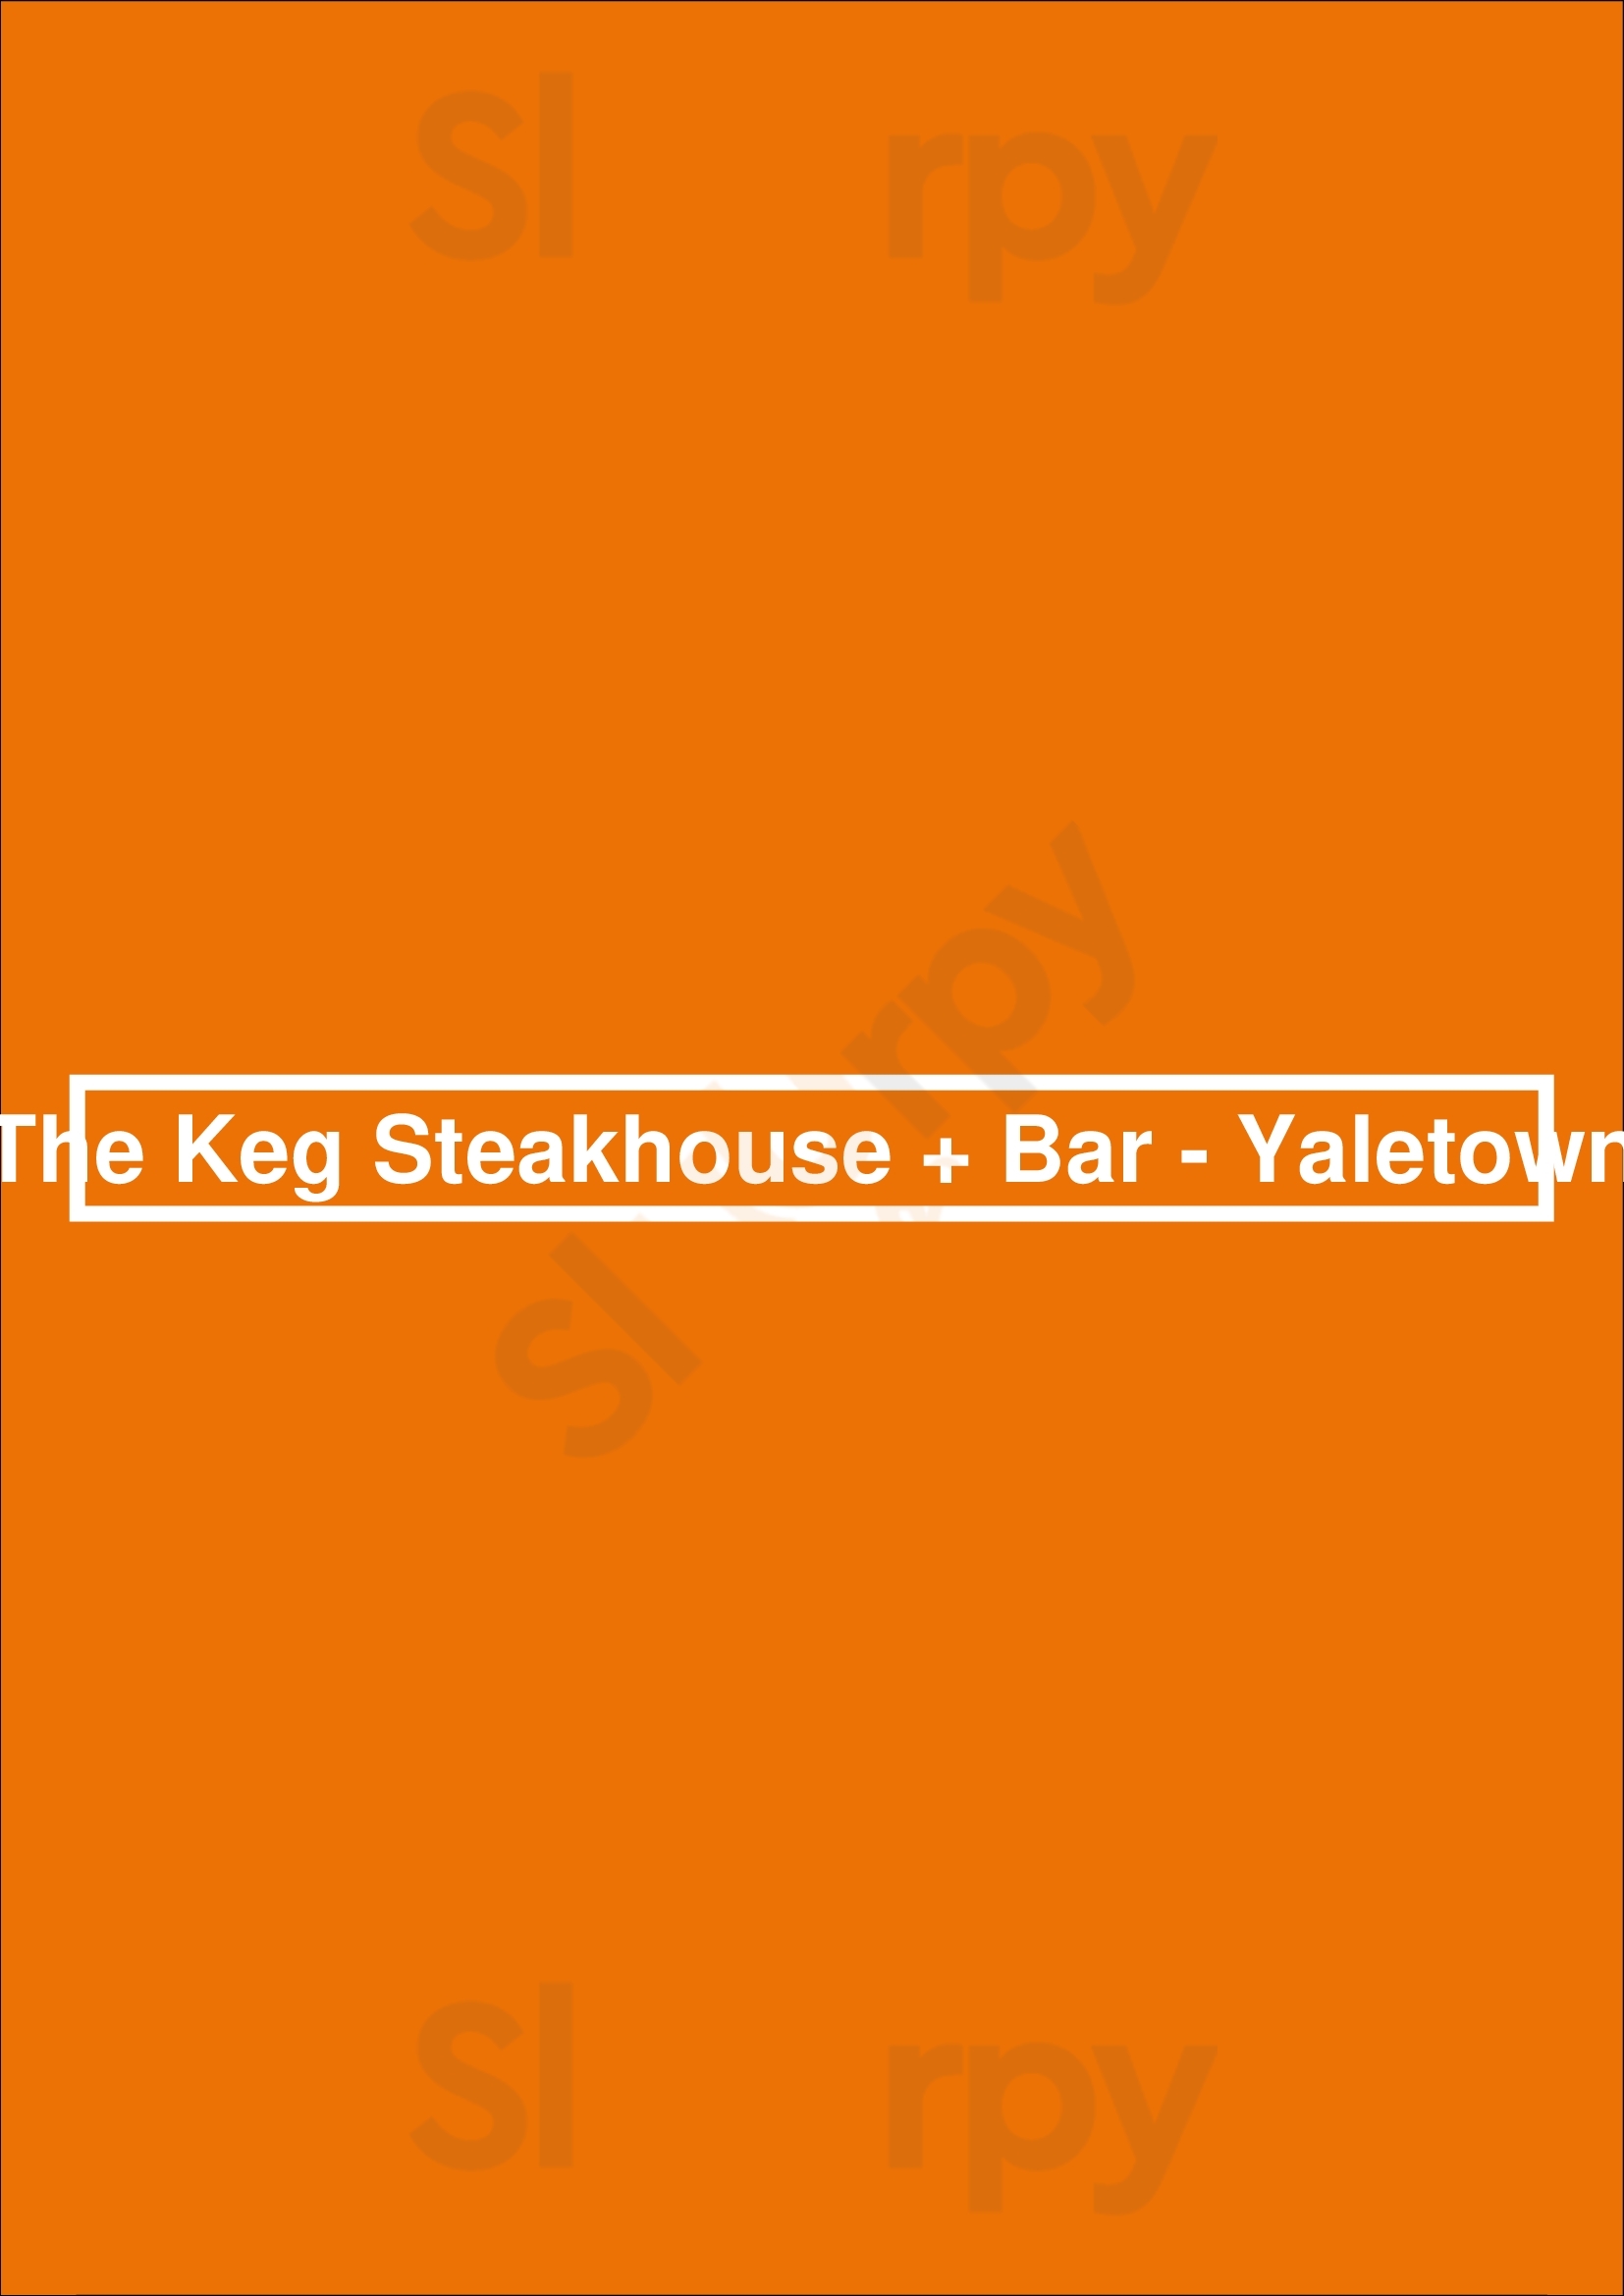 The Keg Steakhouse + Bar - Yaletown Vancouver Menu - 1